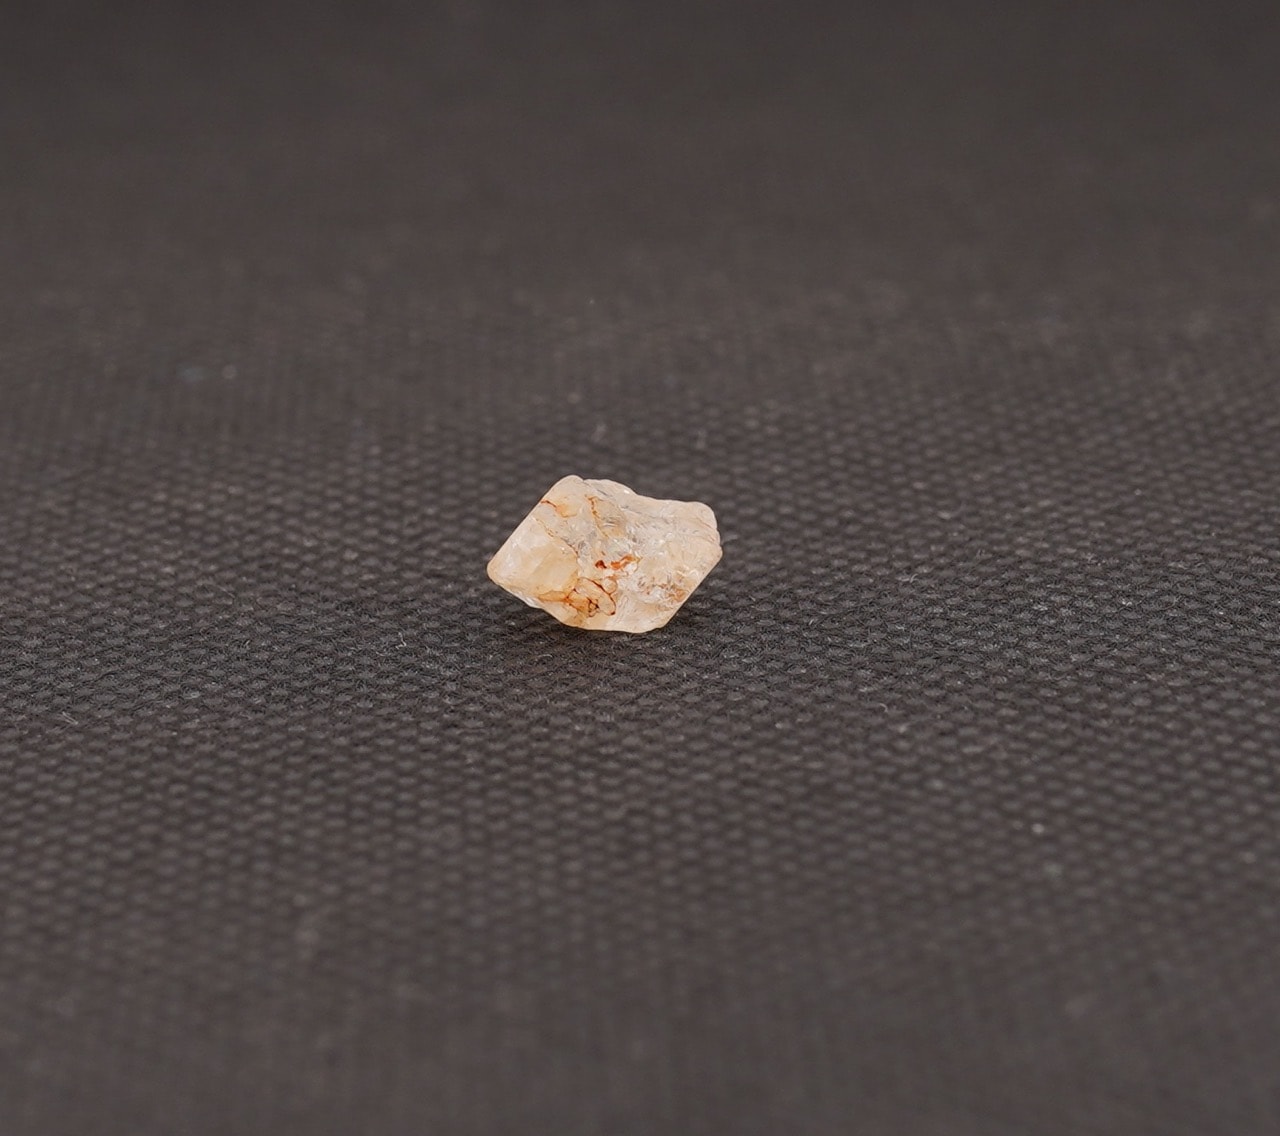 Fenacit nigerian cristal natural unicat f318